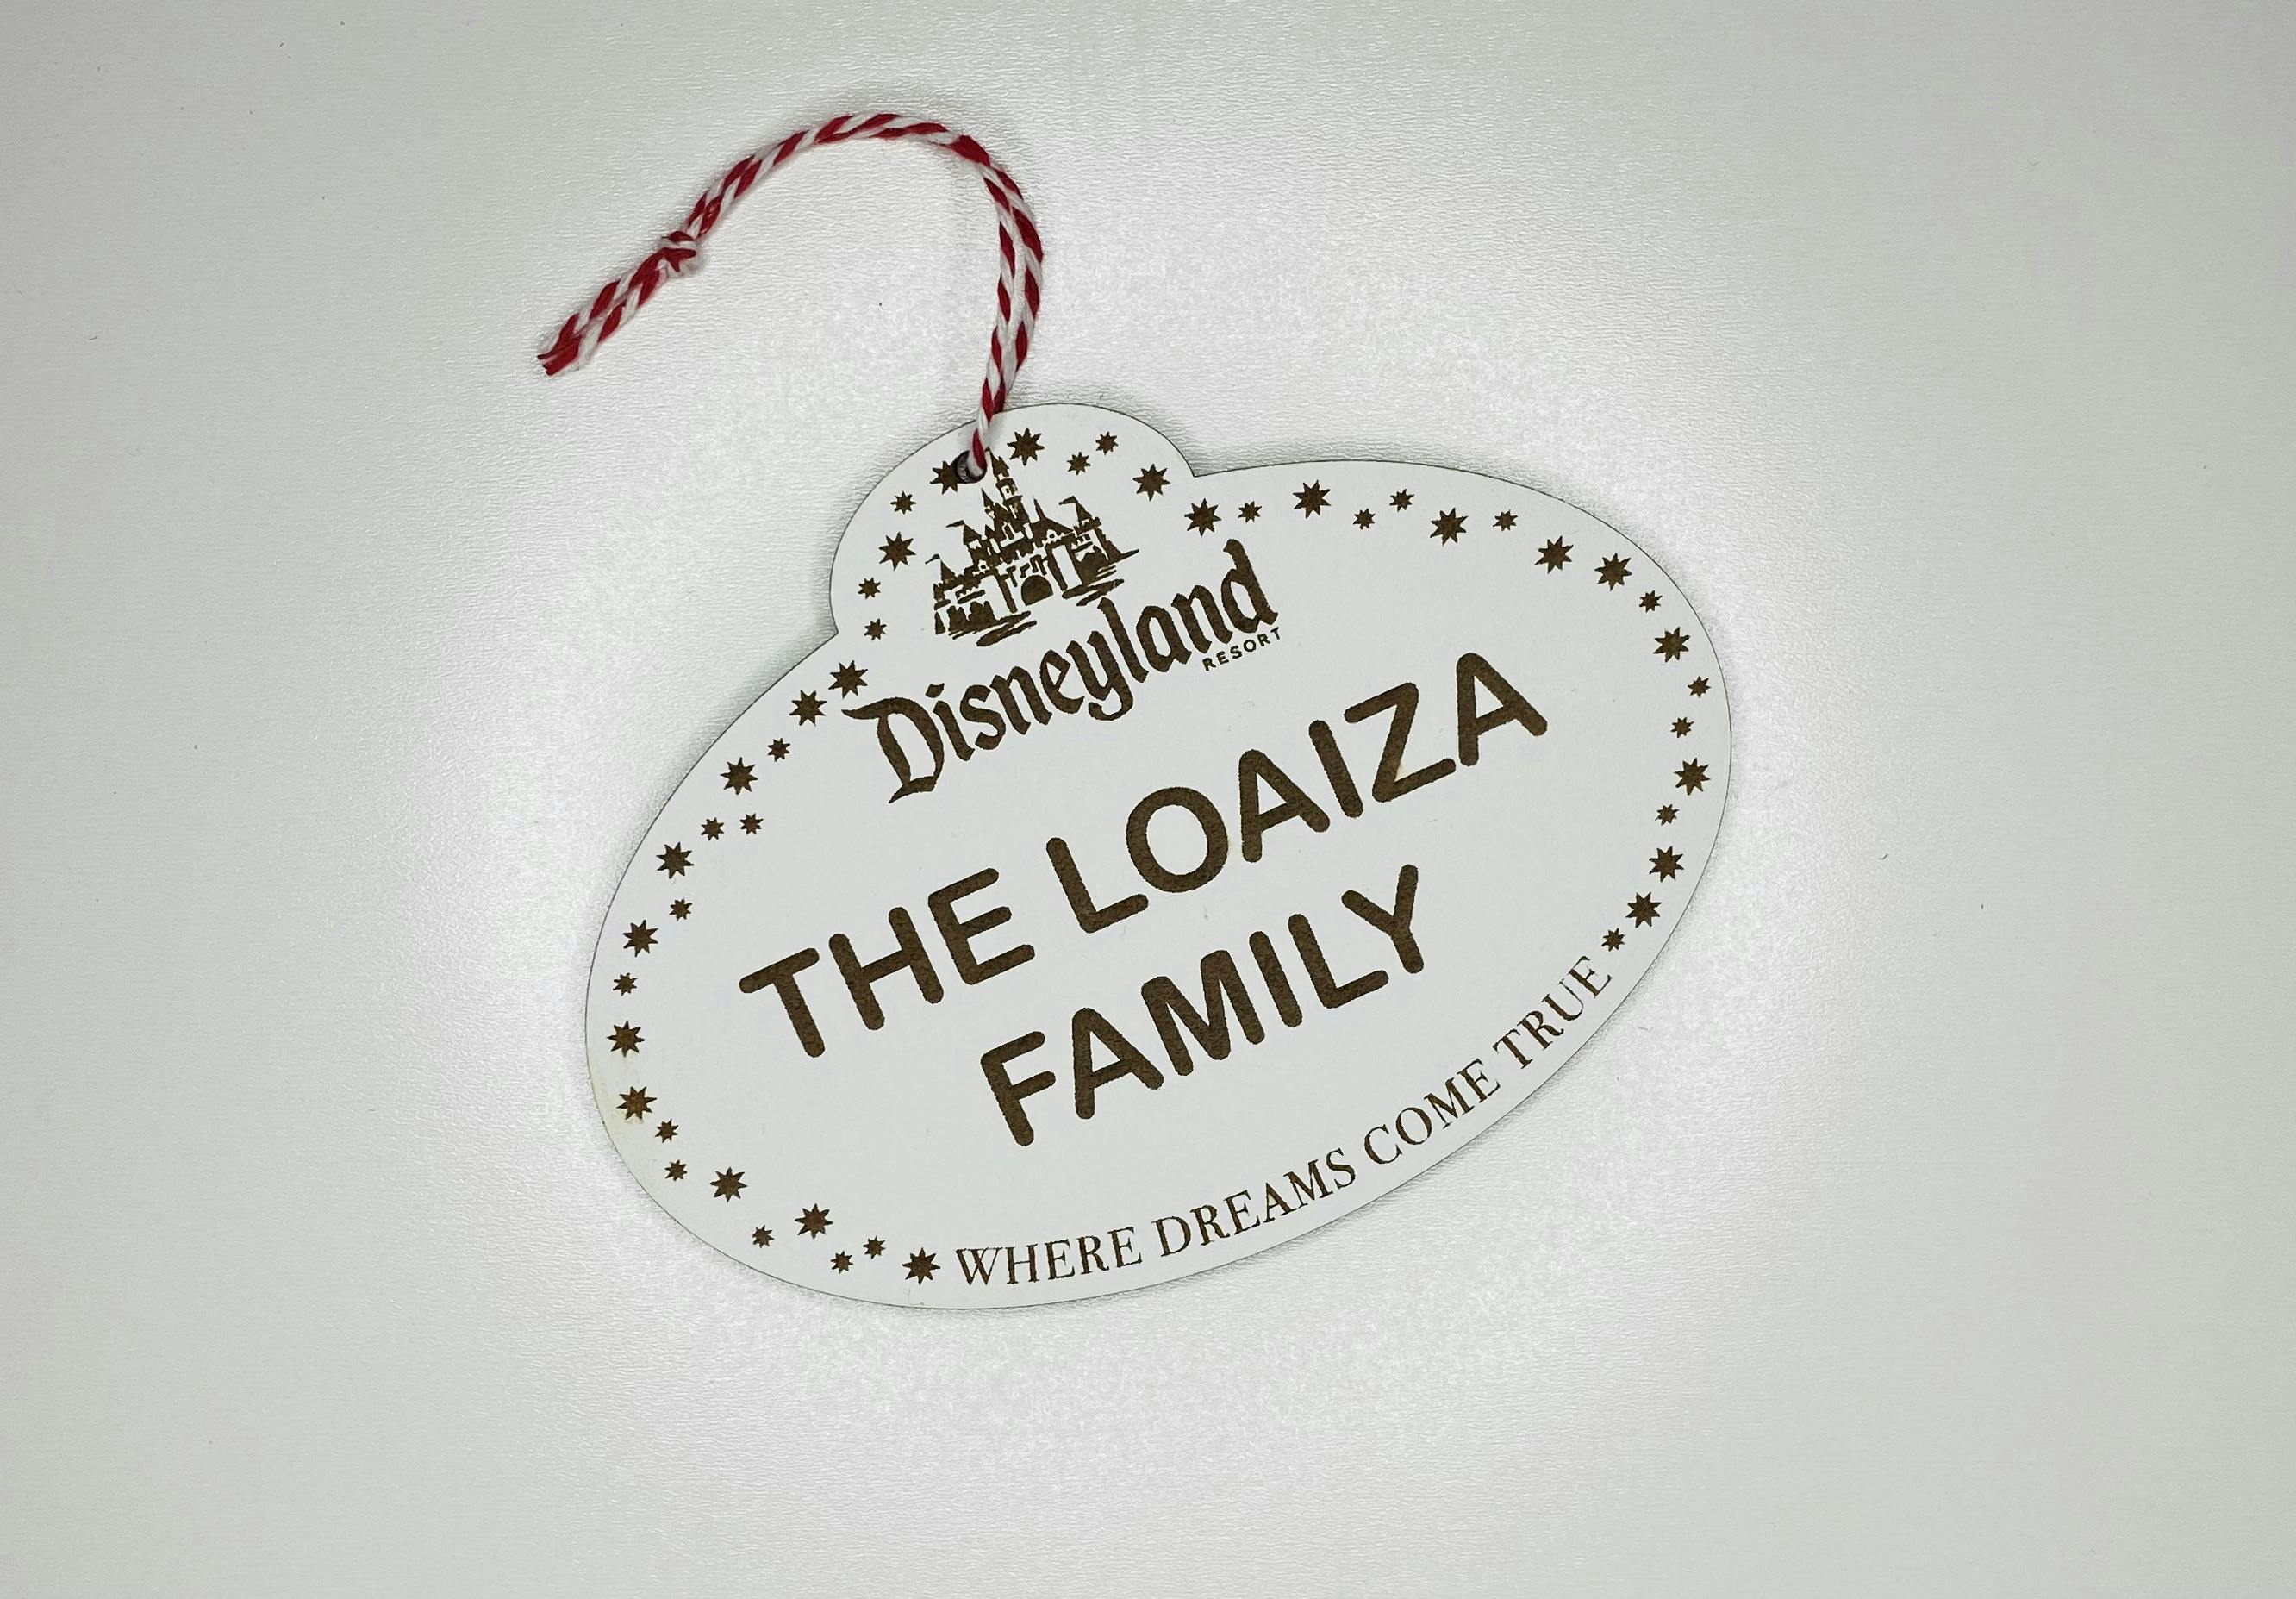 Disney cast member personalized ornament 